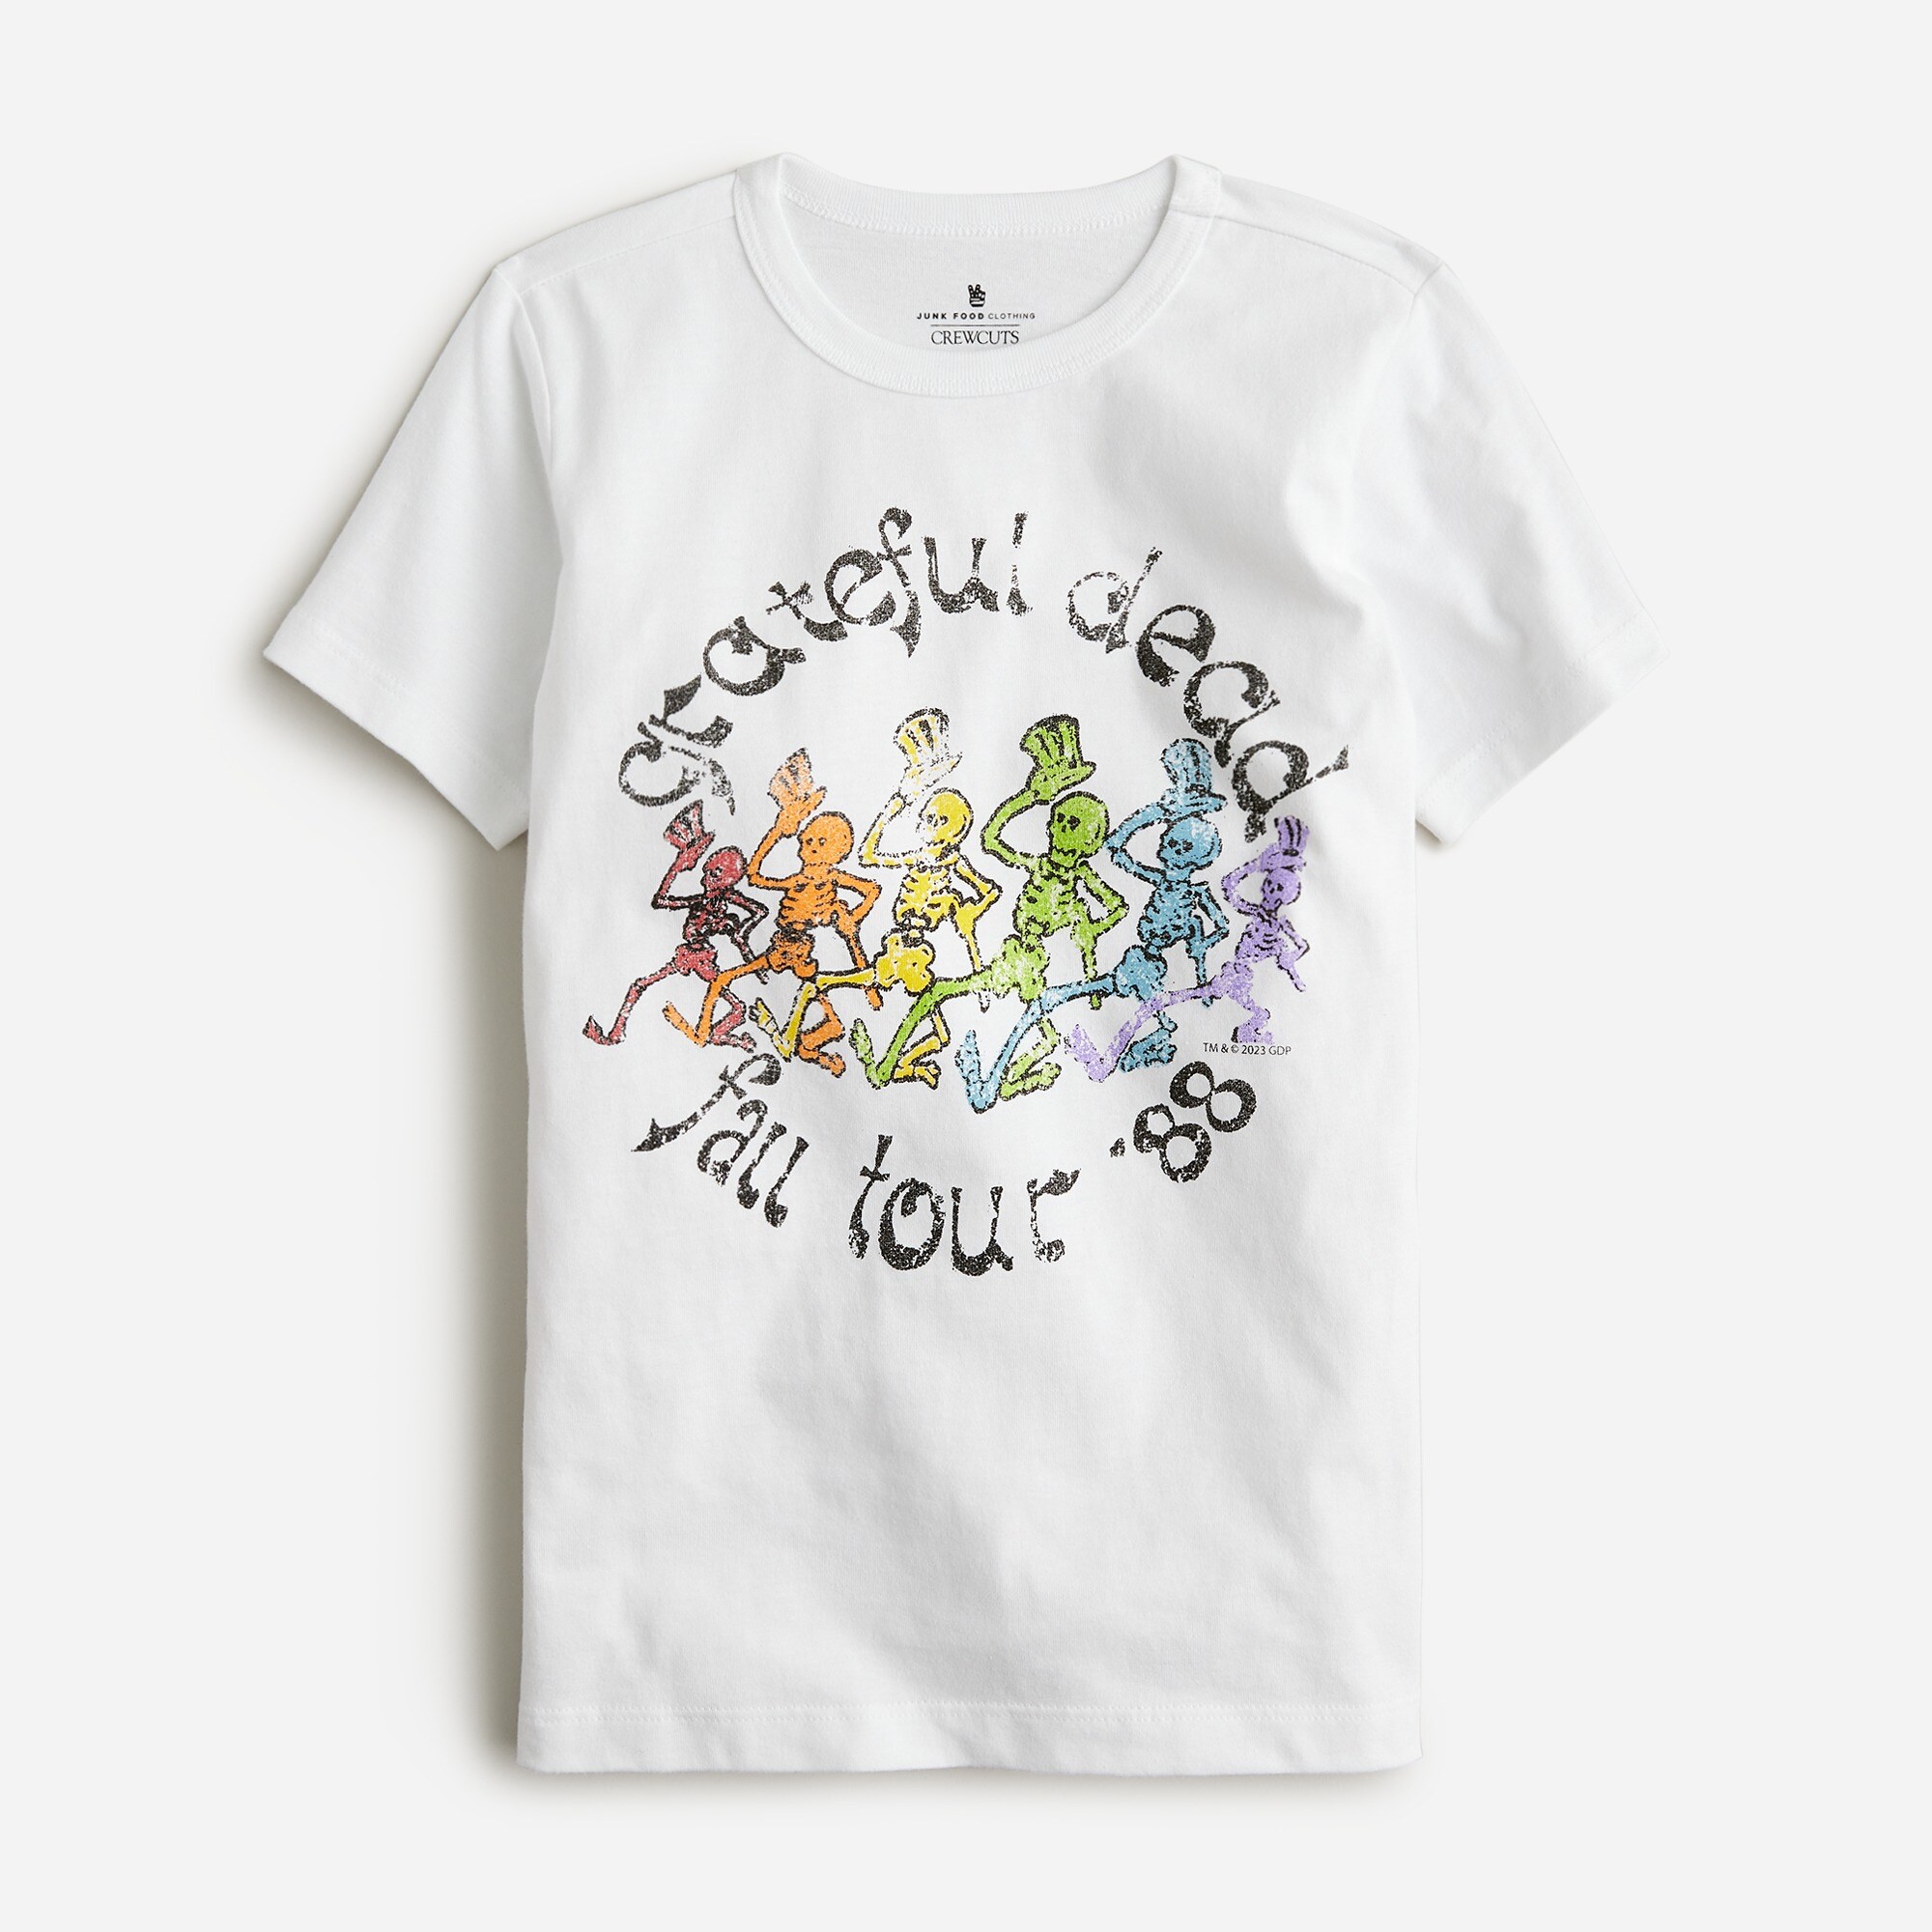  Kids' Junk Food Clothing Grateful Dead graphic T-shirt